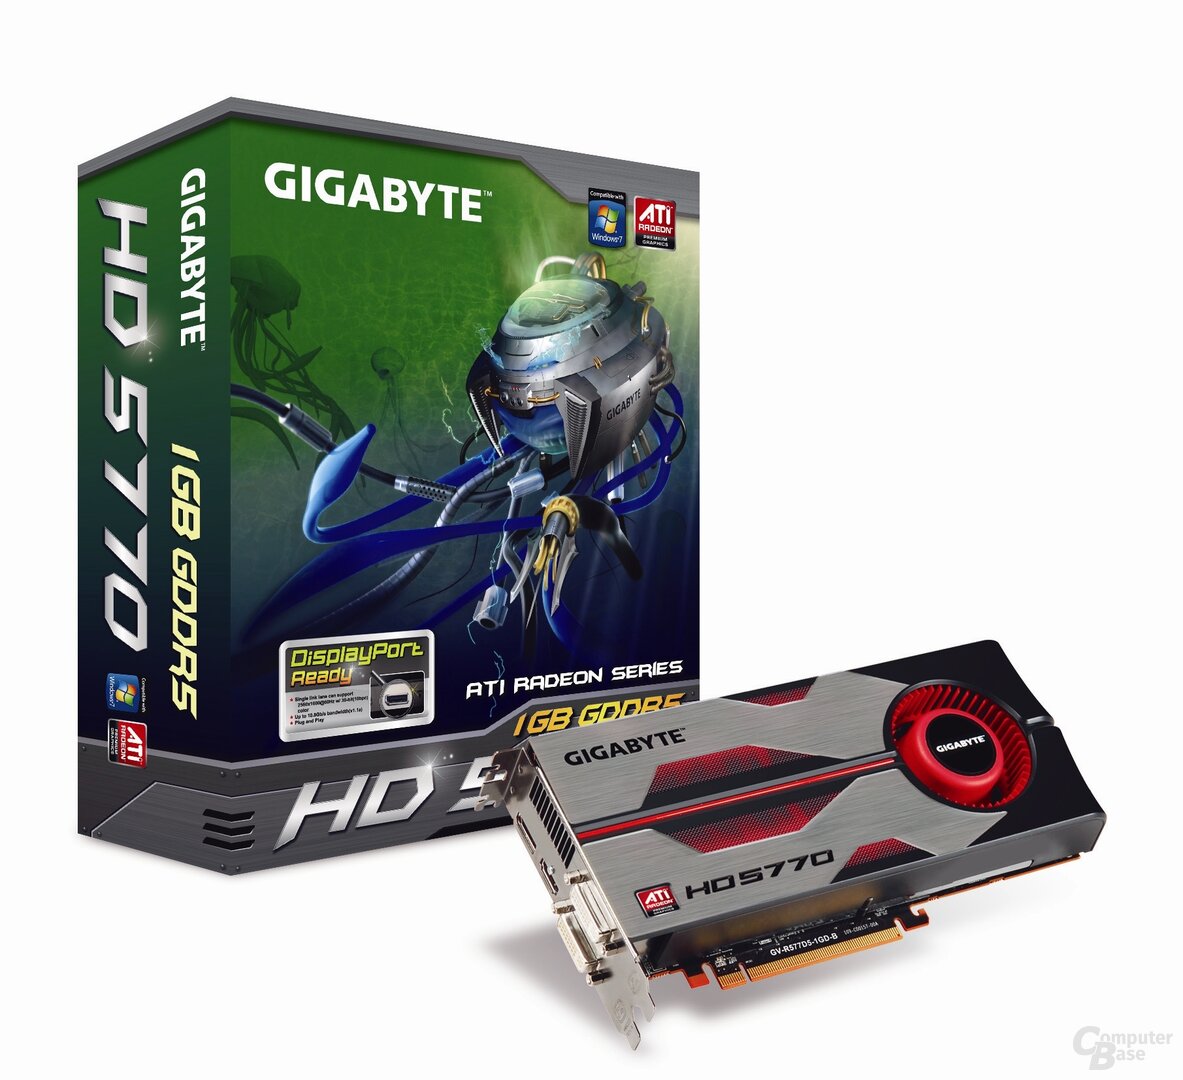 Gigabyte Radeon HD 5770